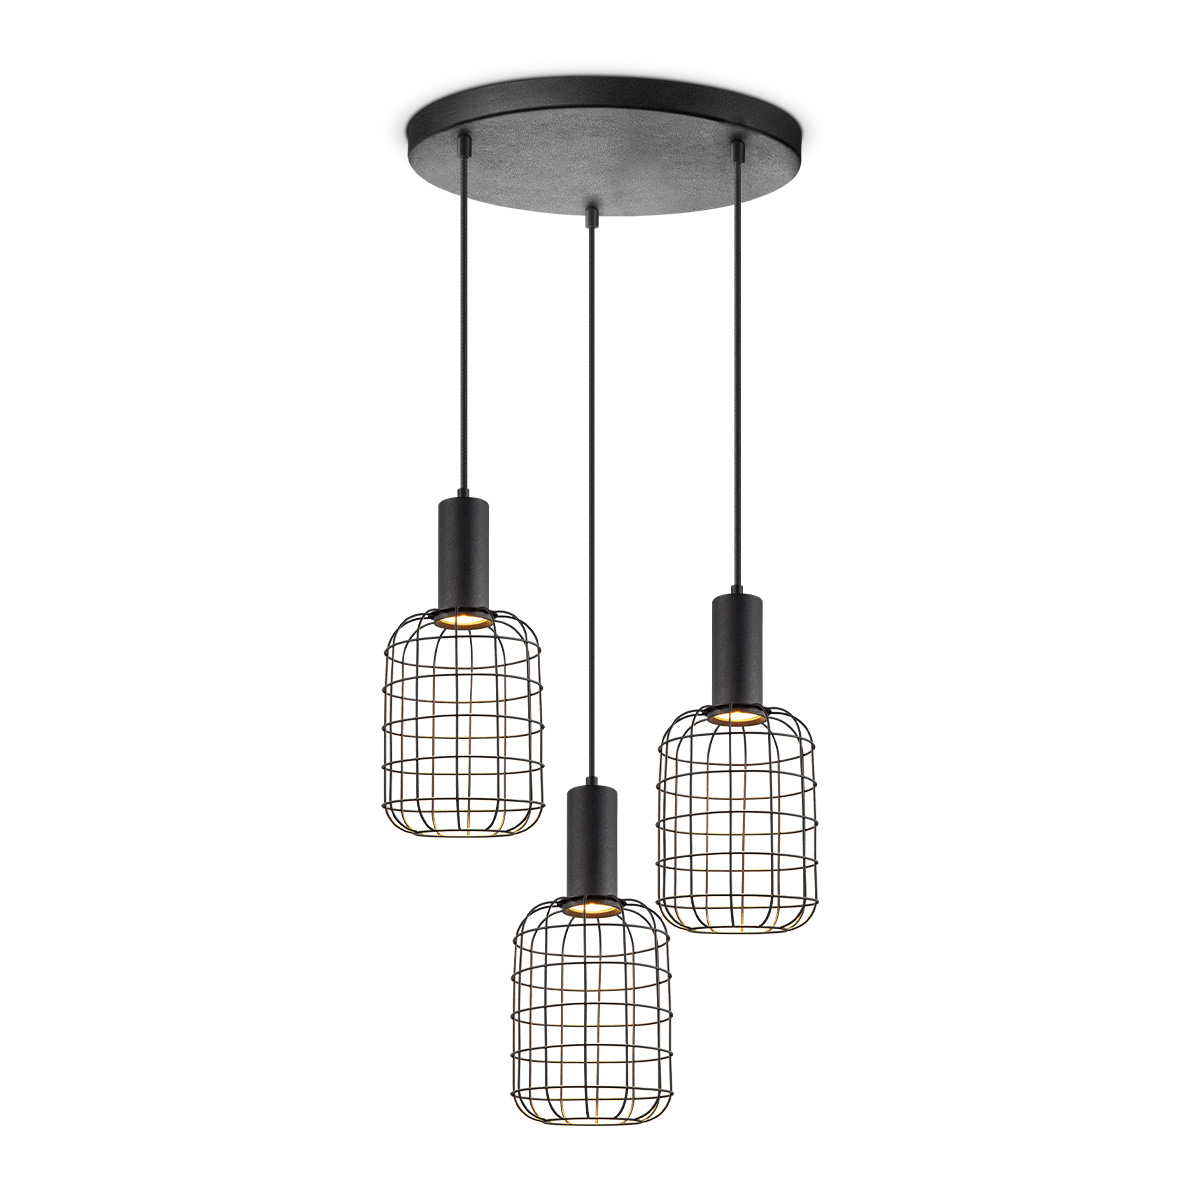 Tangla lighting - TLP7649-03BBK - LED pendant lamp 3 lights - round metal decorative lighting - industrial netting series